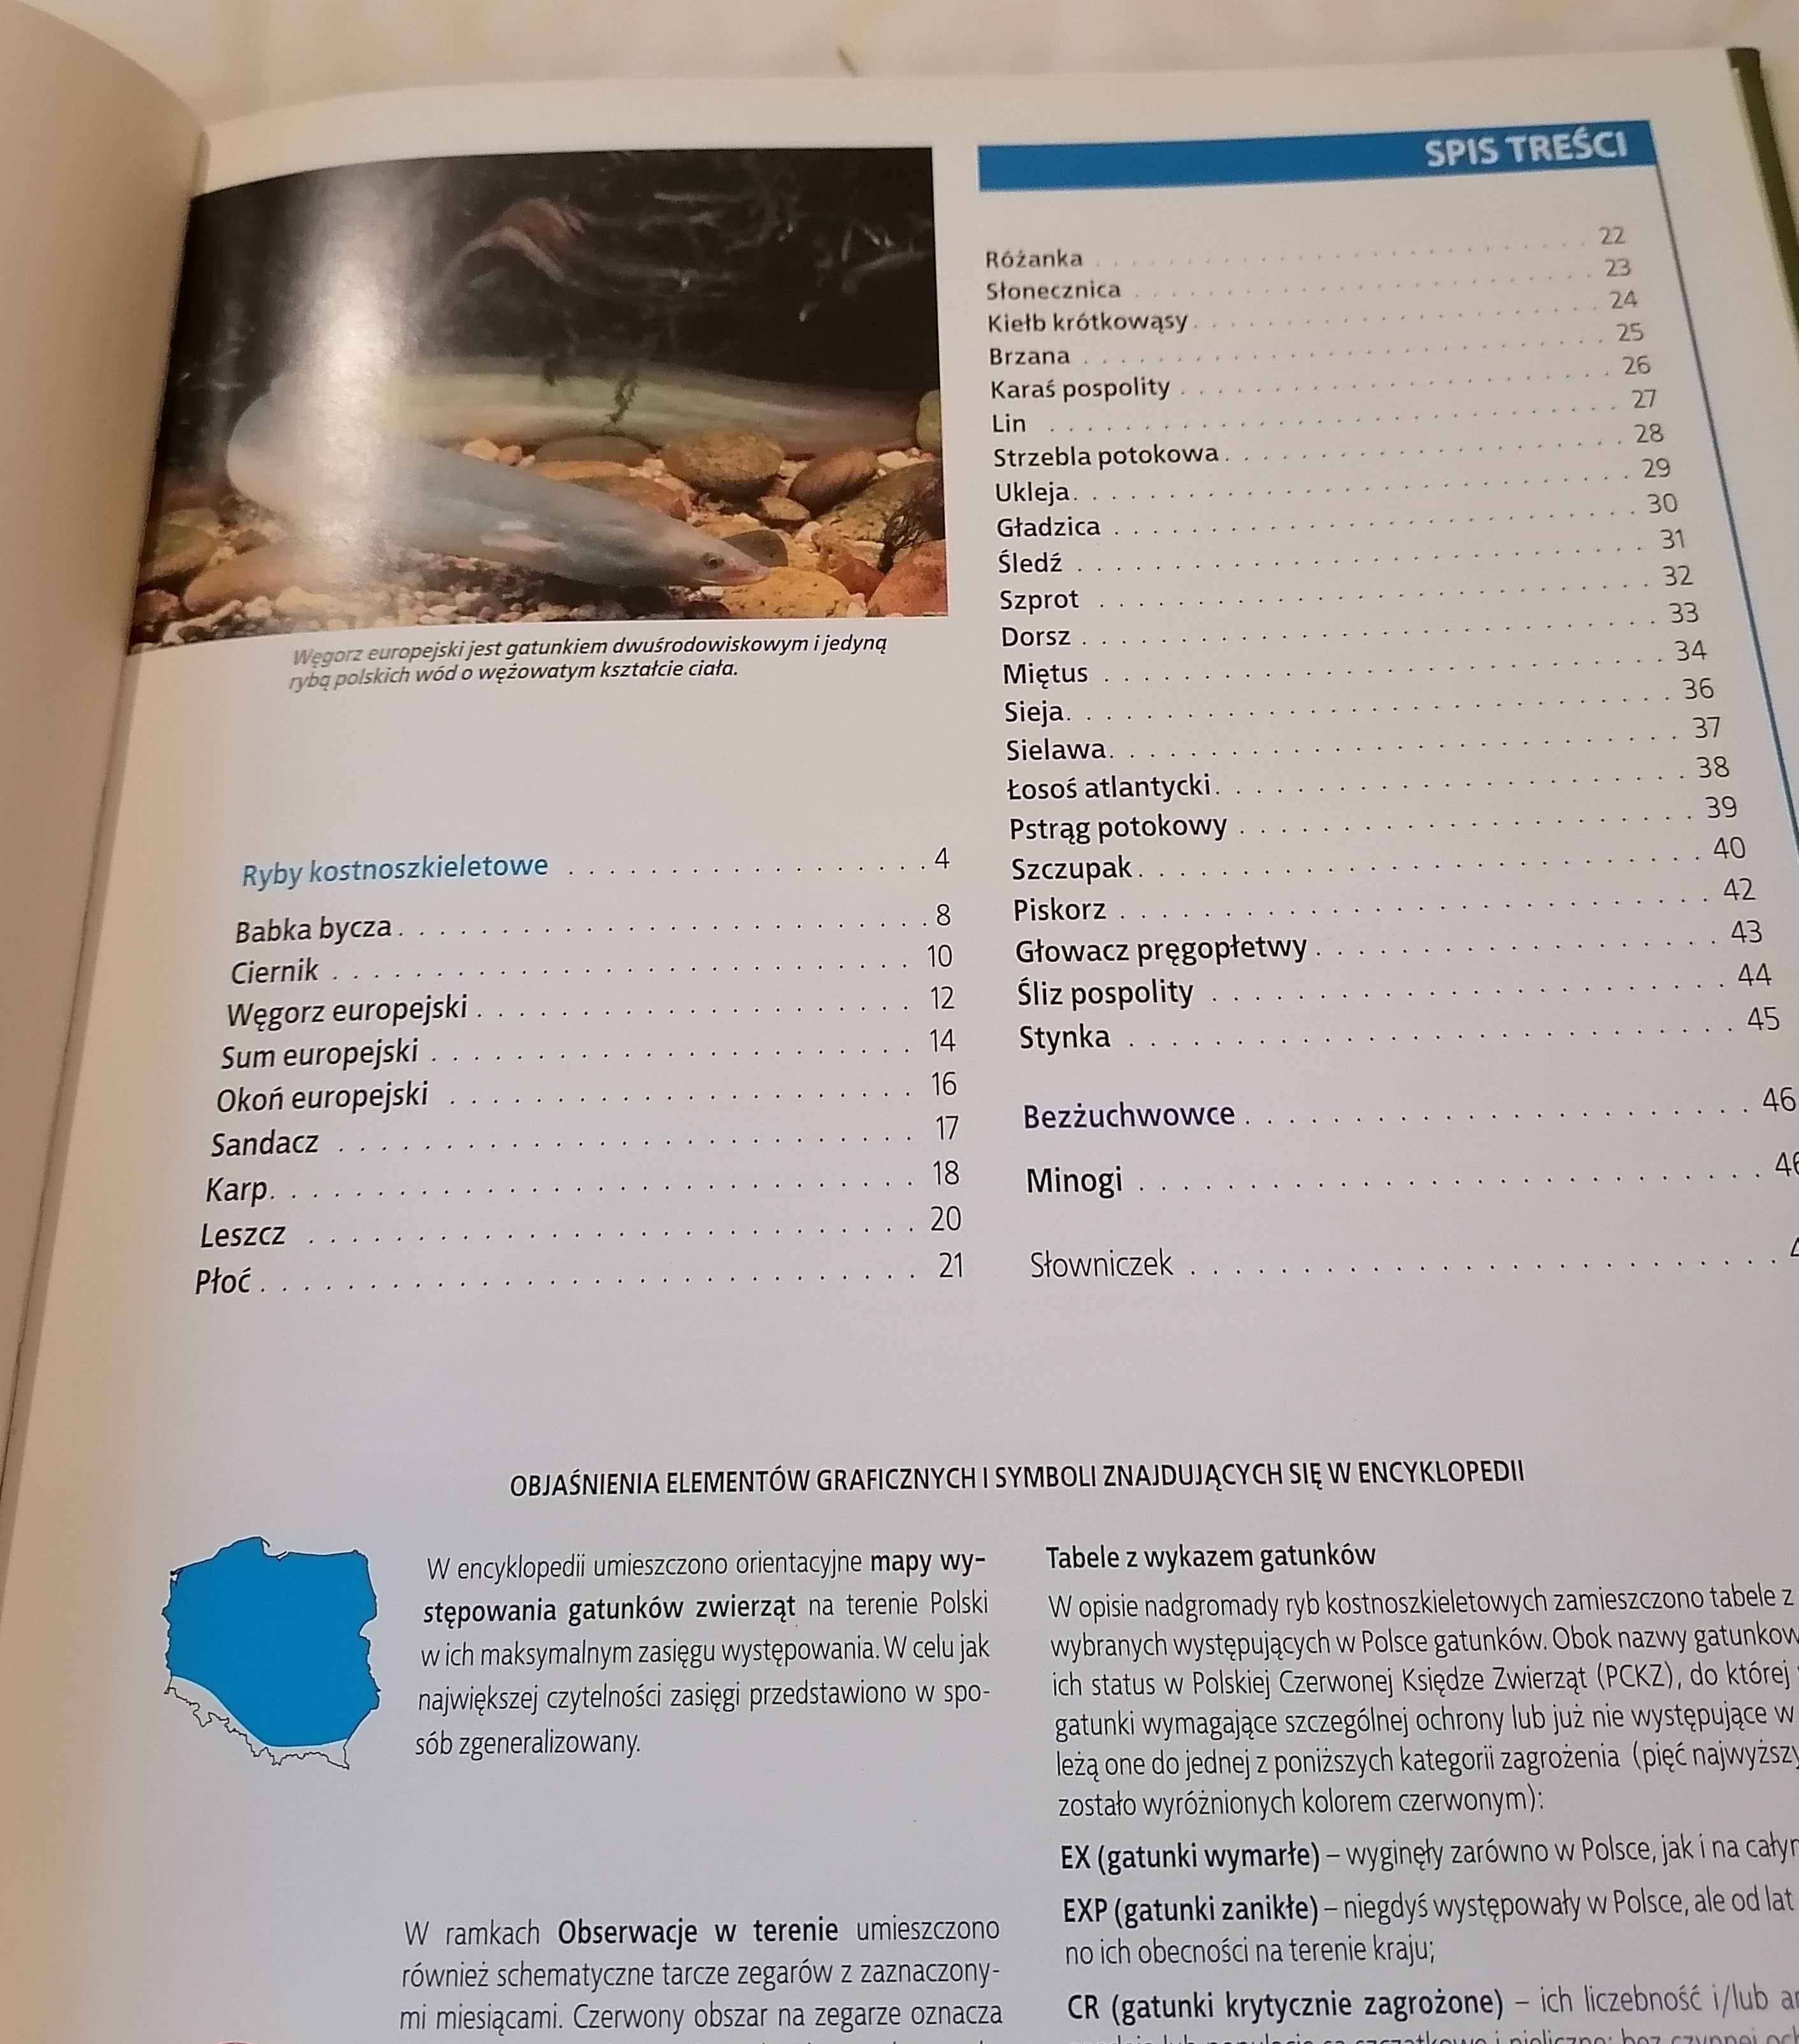 Encyklopedia Przyrody Ryby i bezżuchwowce tom 8